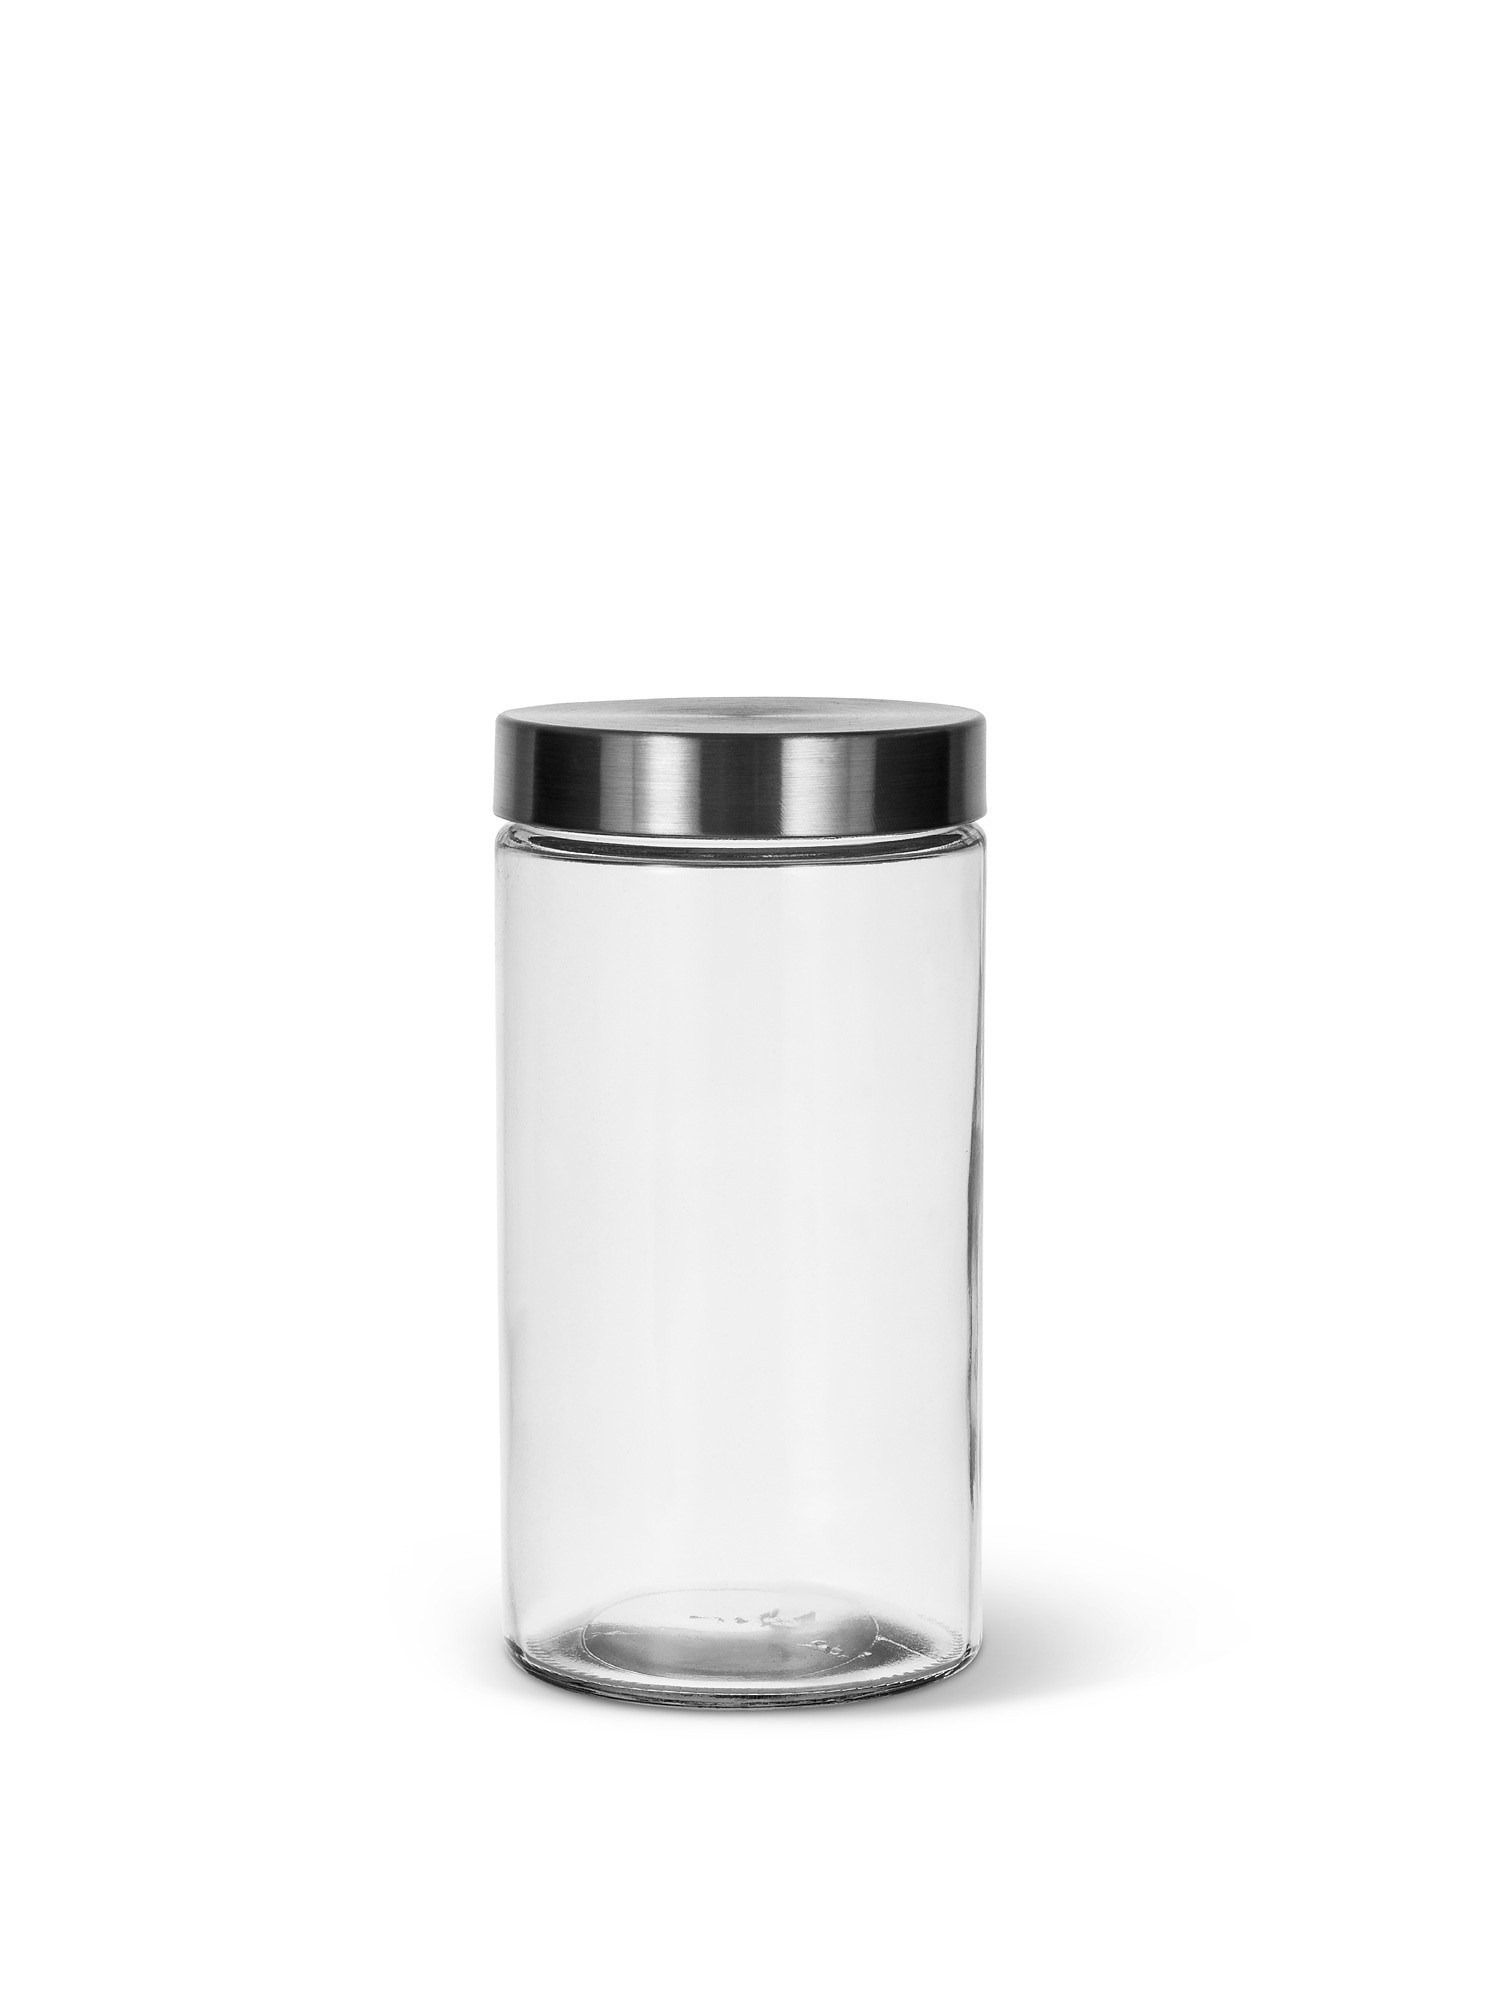 Glass jar with steel cap, Transparent, large image number 0